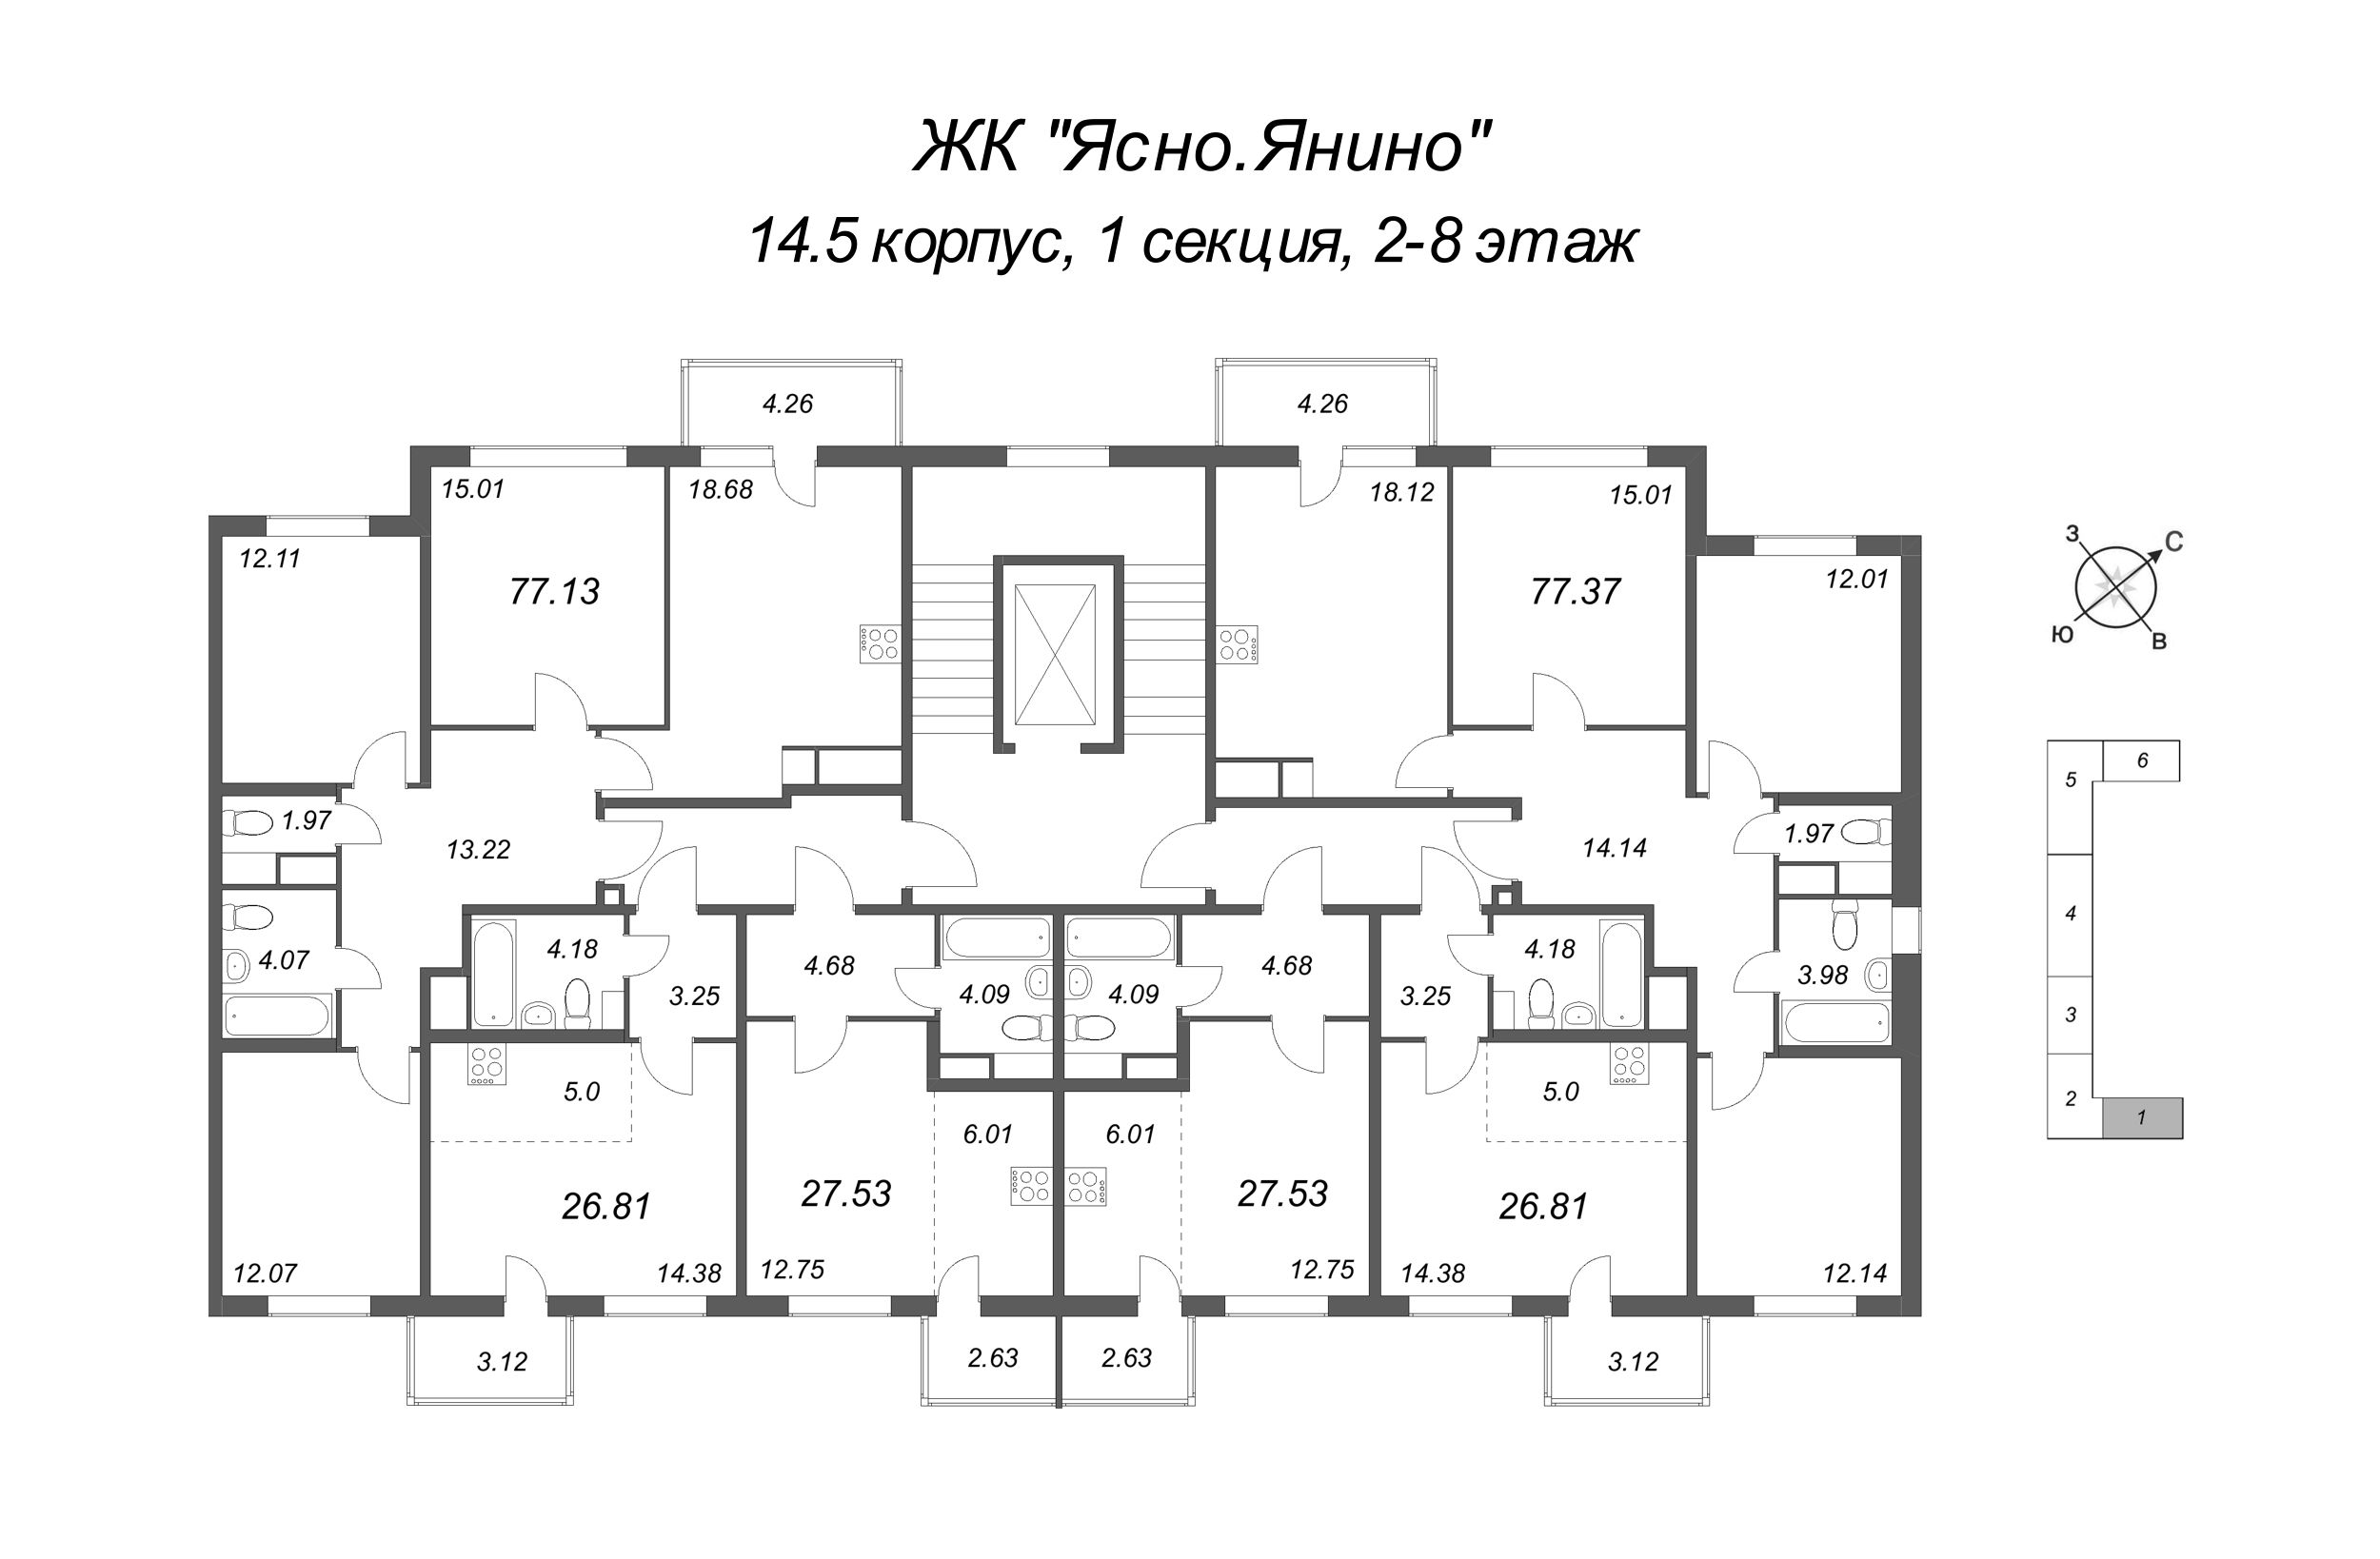 4-комнатная (Евро) квартира, 77.13 м² в ЖК "Ясно.Янино" - планировка этажа